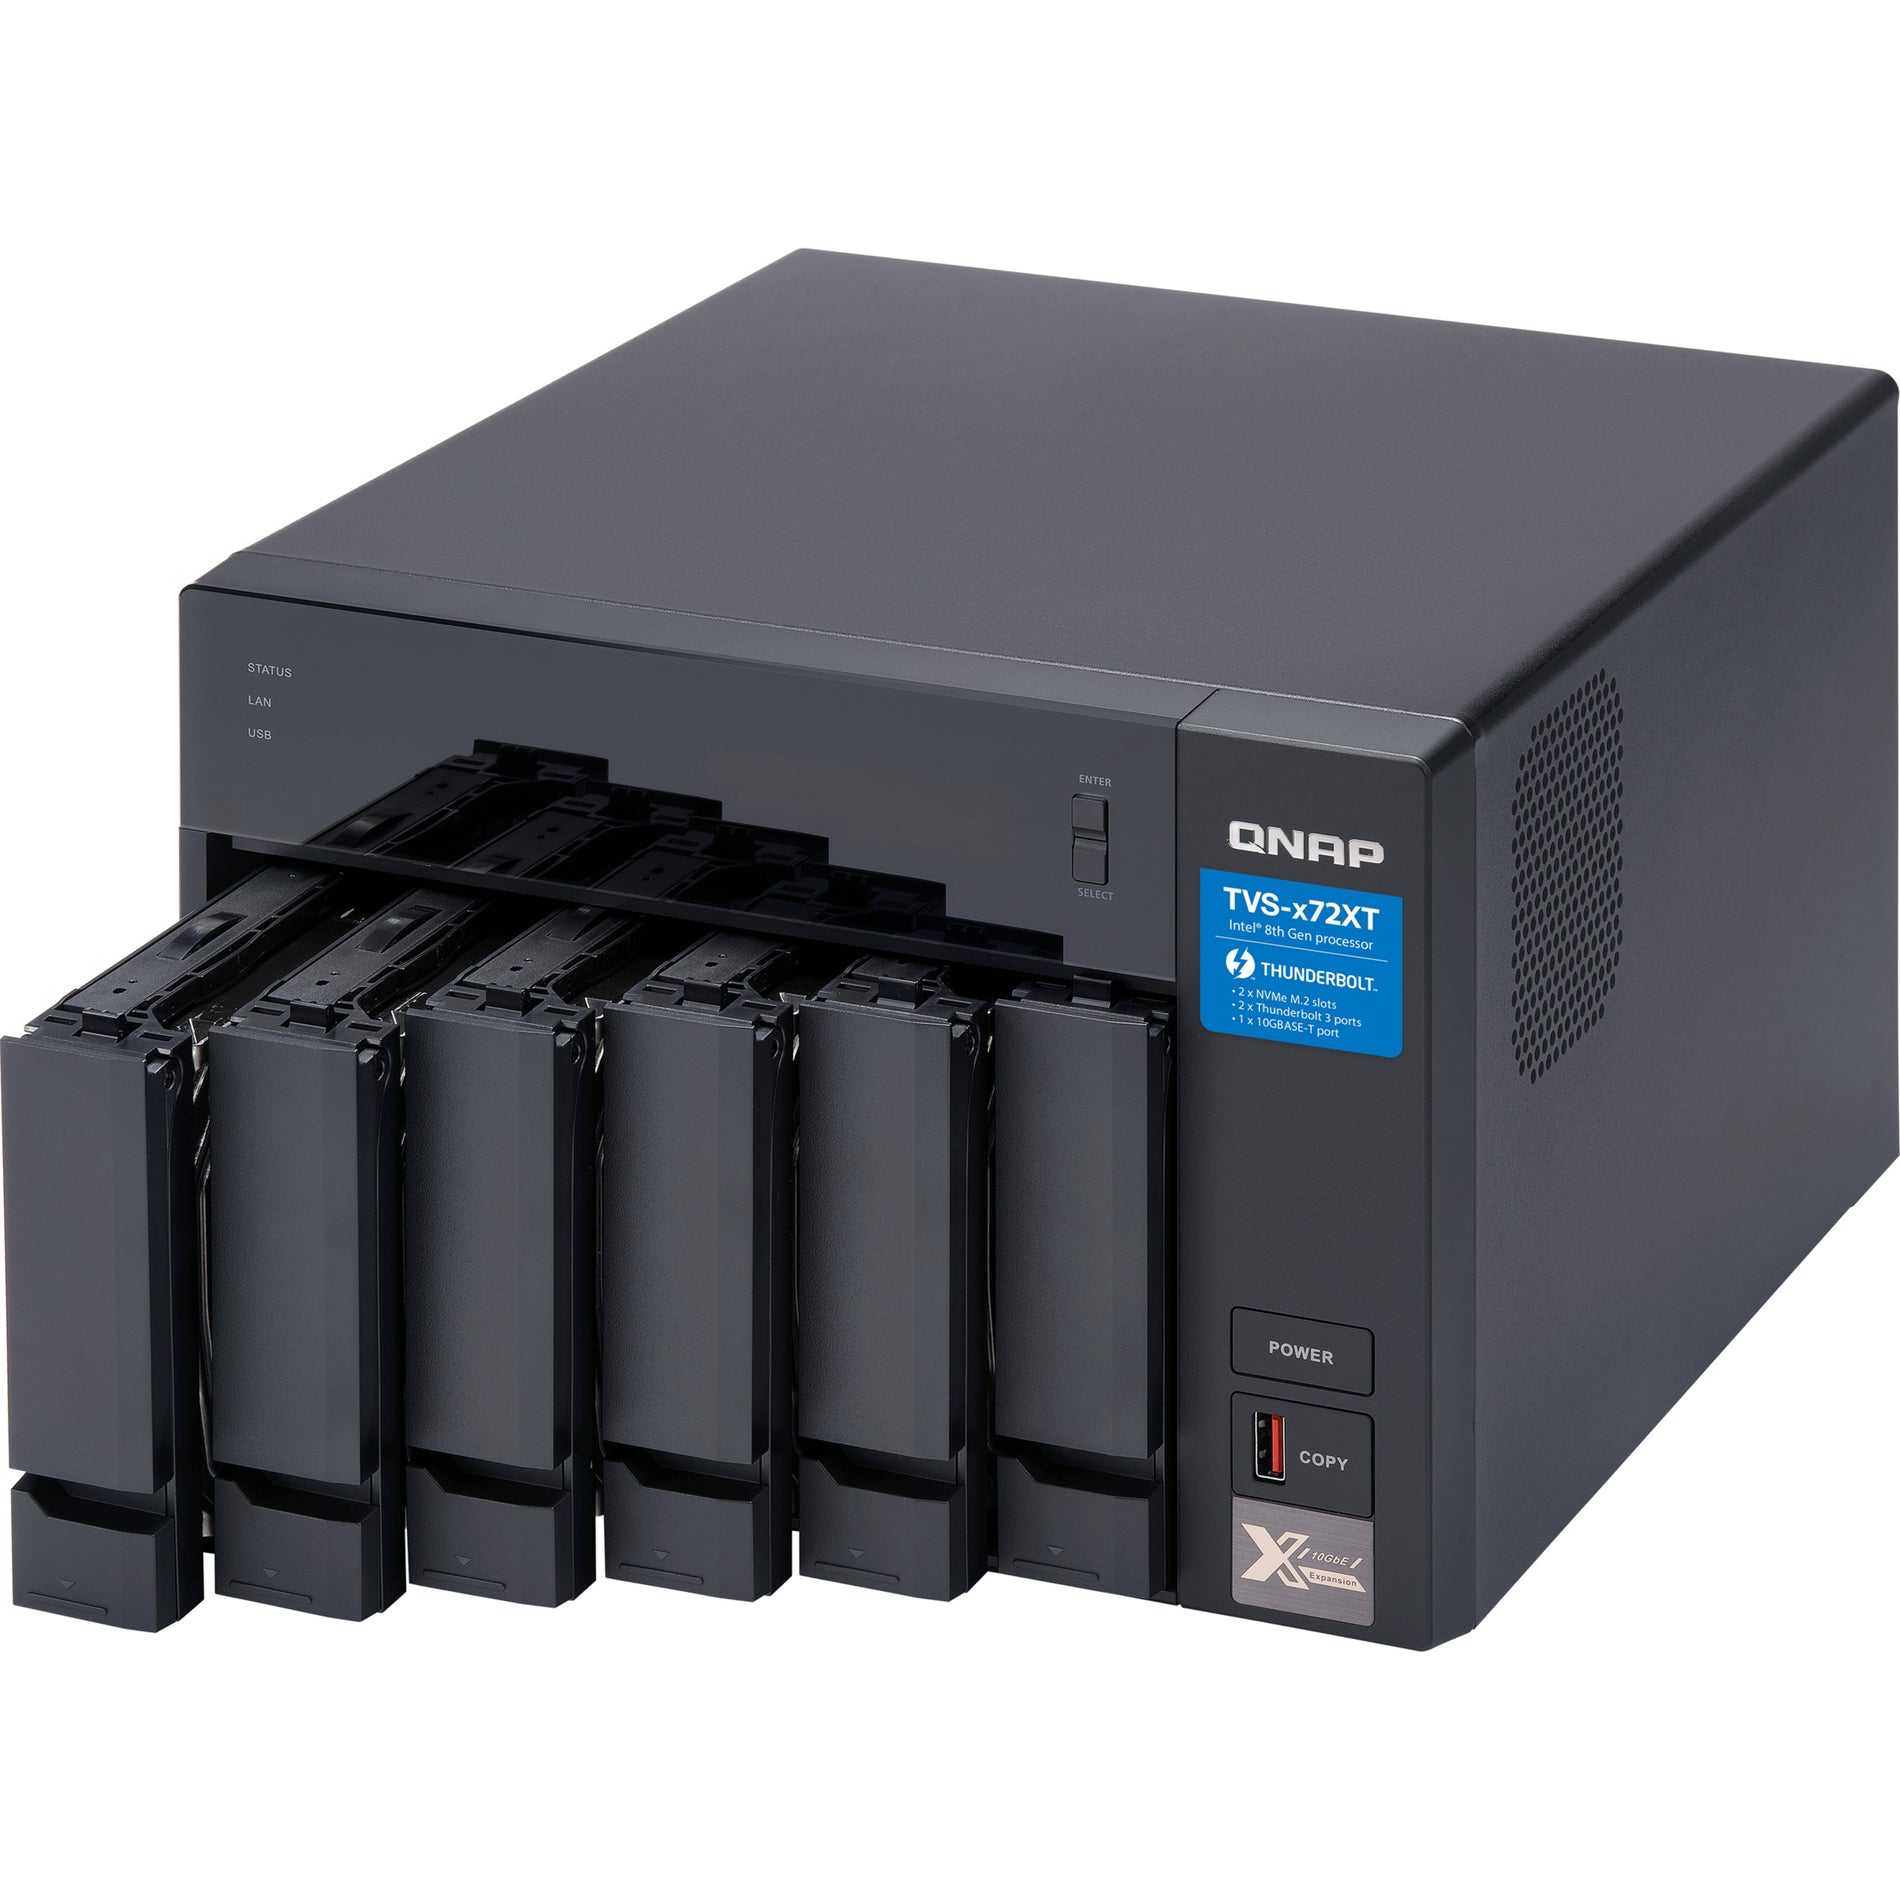 QNAP TVS-672XT-I3-8G-US TVS-672XT-I3-8G SAN/NAS/DAS Storage System、クアッドコア、8GB RAM、6ベイ、サンダーボルト3、10Gb Ethernet を翻訳します。  ブランド名：QNAP 翻訳：キューエンエーピー